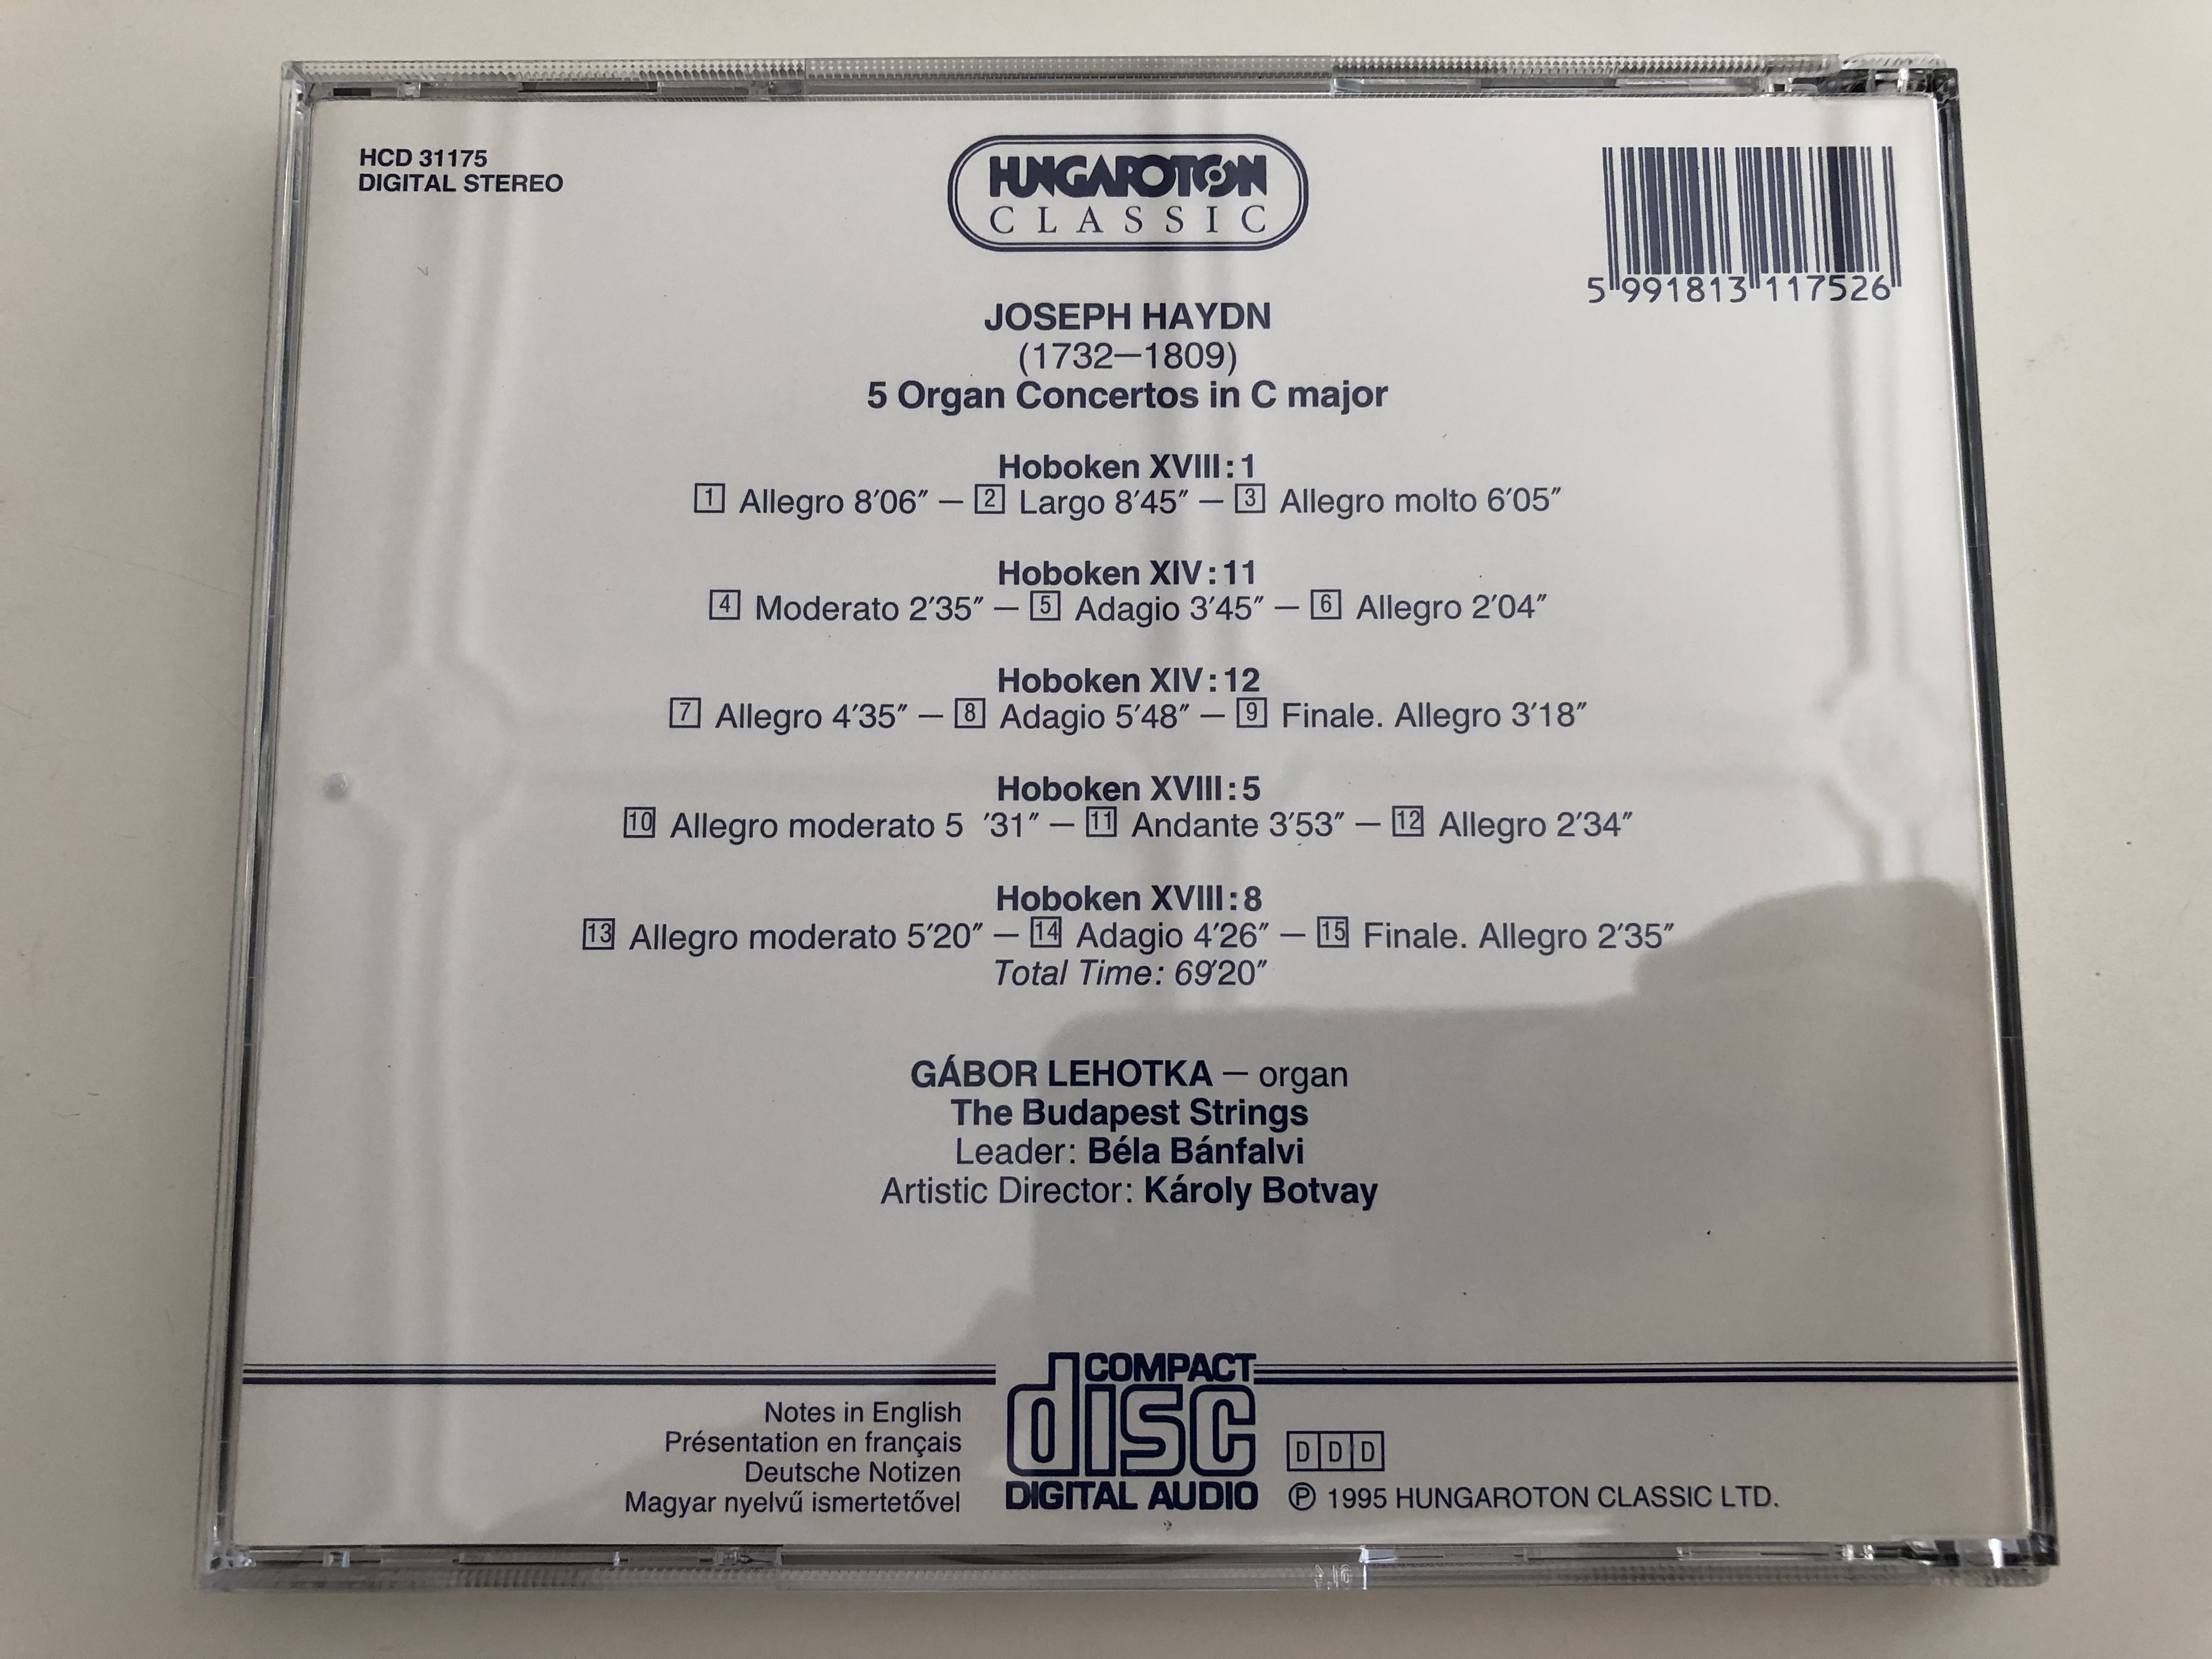 joseph-haydn-organ-concertos-g-bor-lehotka-the-budapest-strings-hungaroton-classic-audio-cd-1995-hcd-31175-8-.jpg